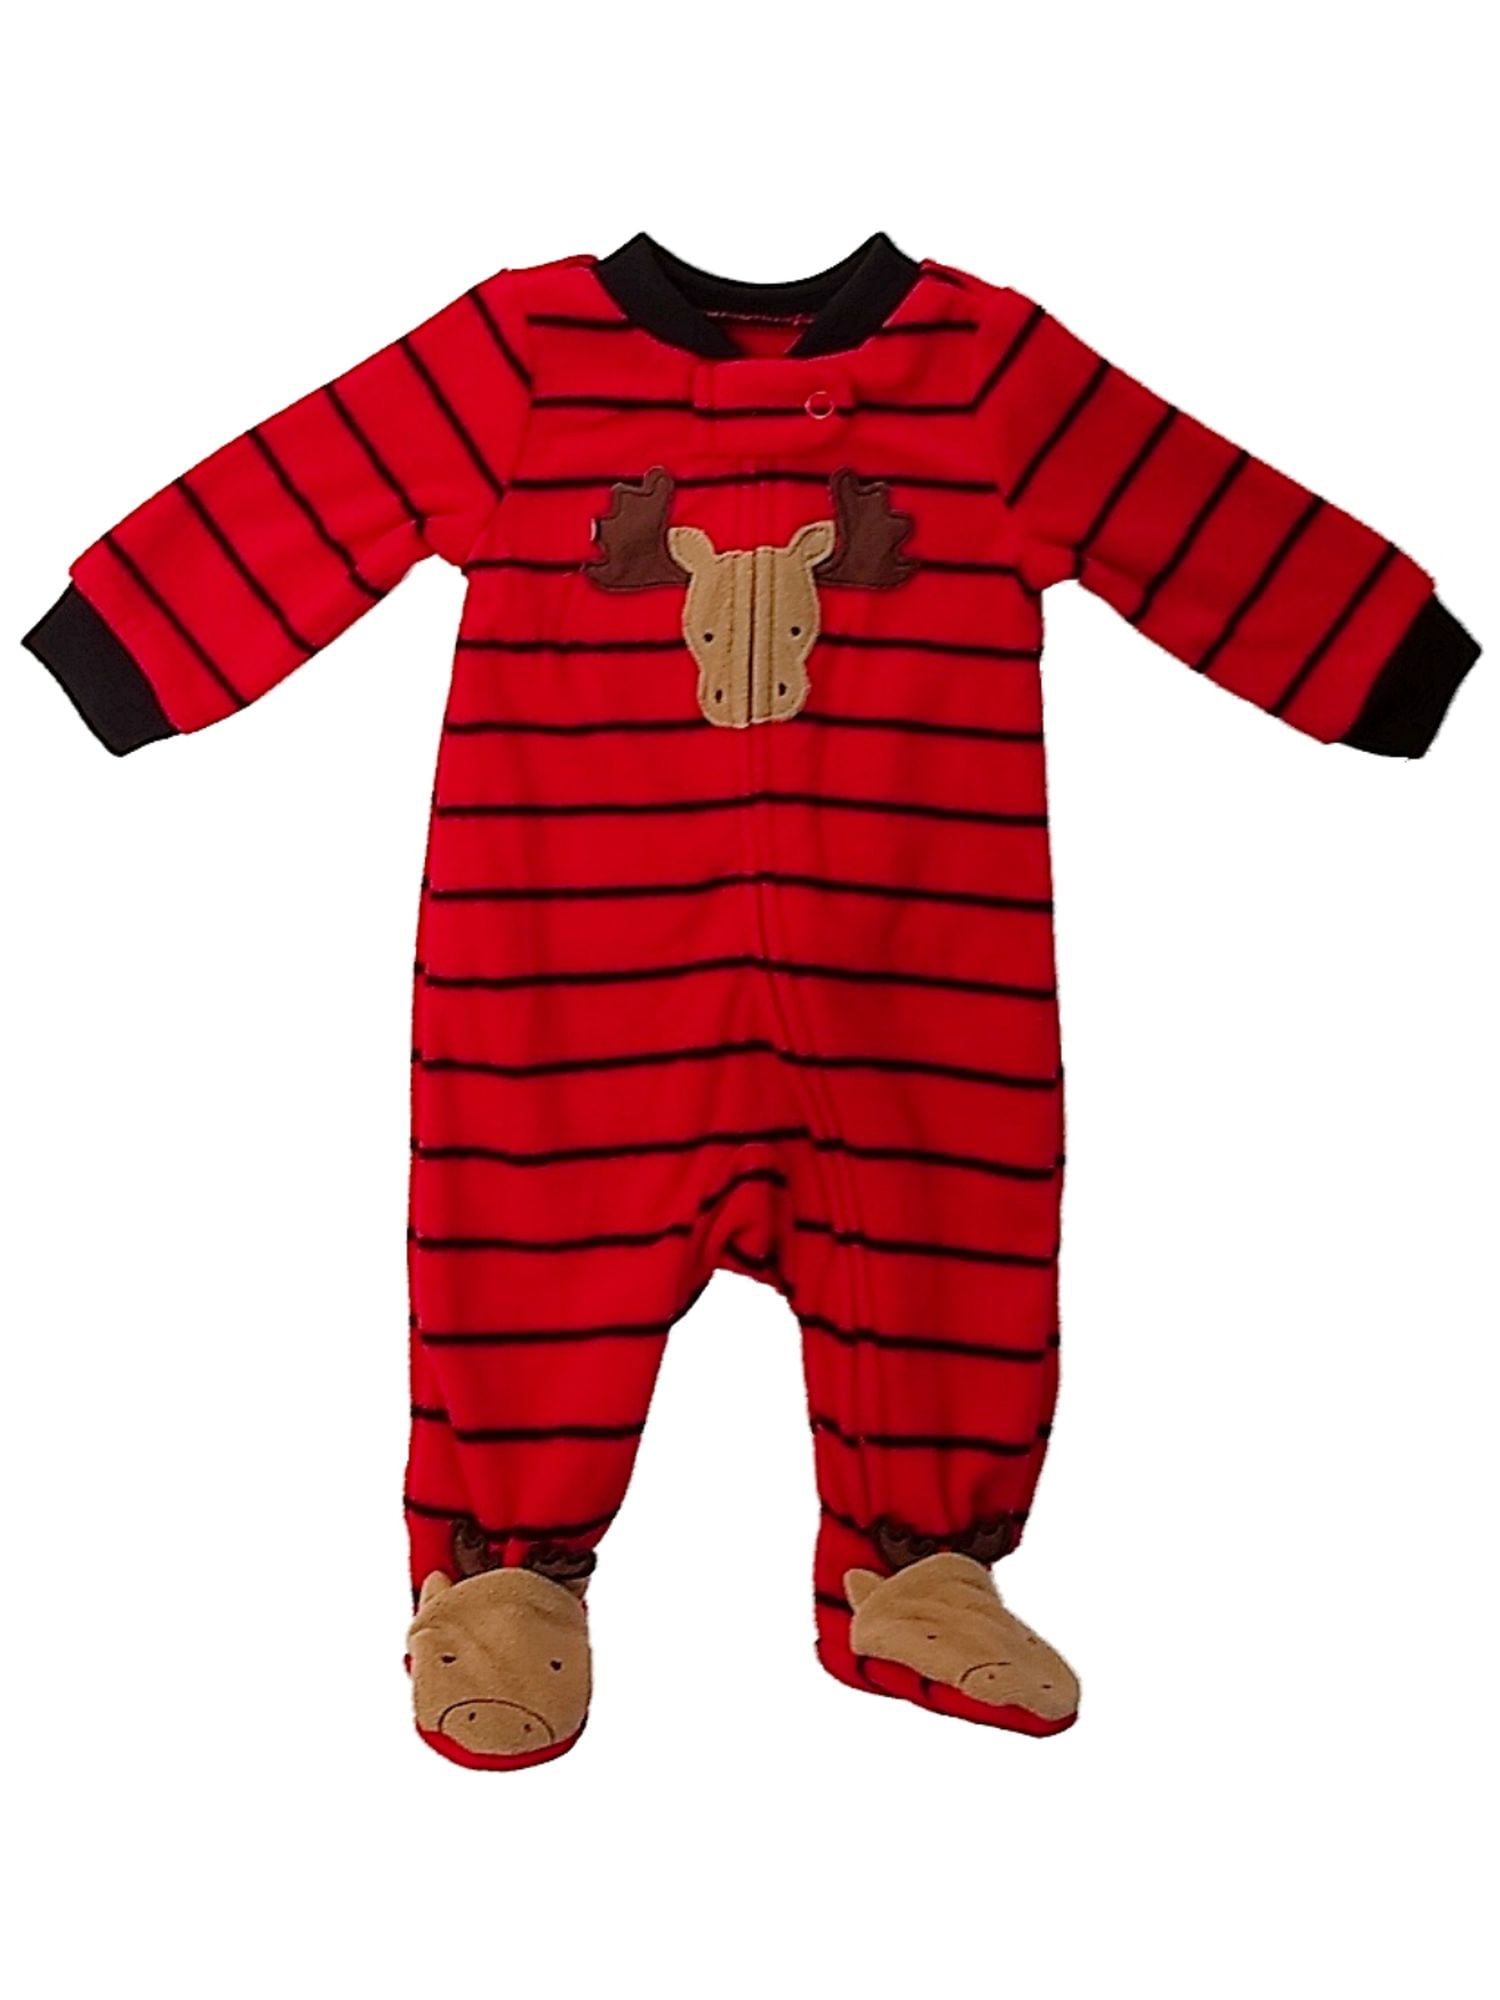 Carter's Carters Infant Boys Red Fleece Reindeer Christmas Footie Sleeper Pajamas NB Walmart